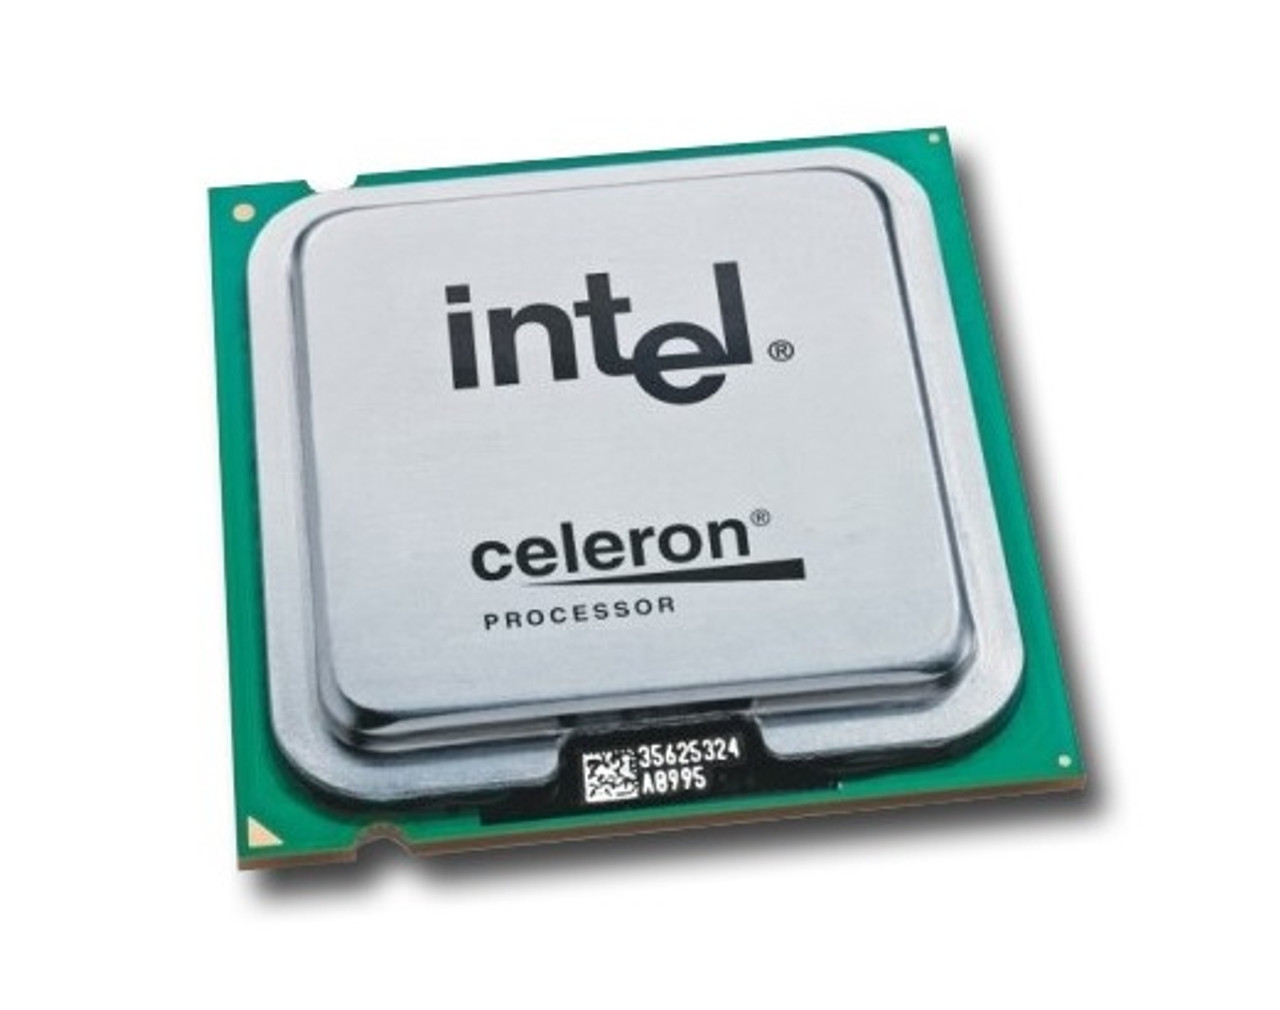 SL7VS - Intel Celeron D 330J 2.66GHz 533MHz FSB 256KB L2 Cache Socket PLGA775 Processor